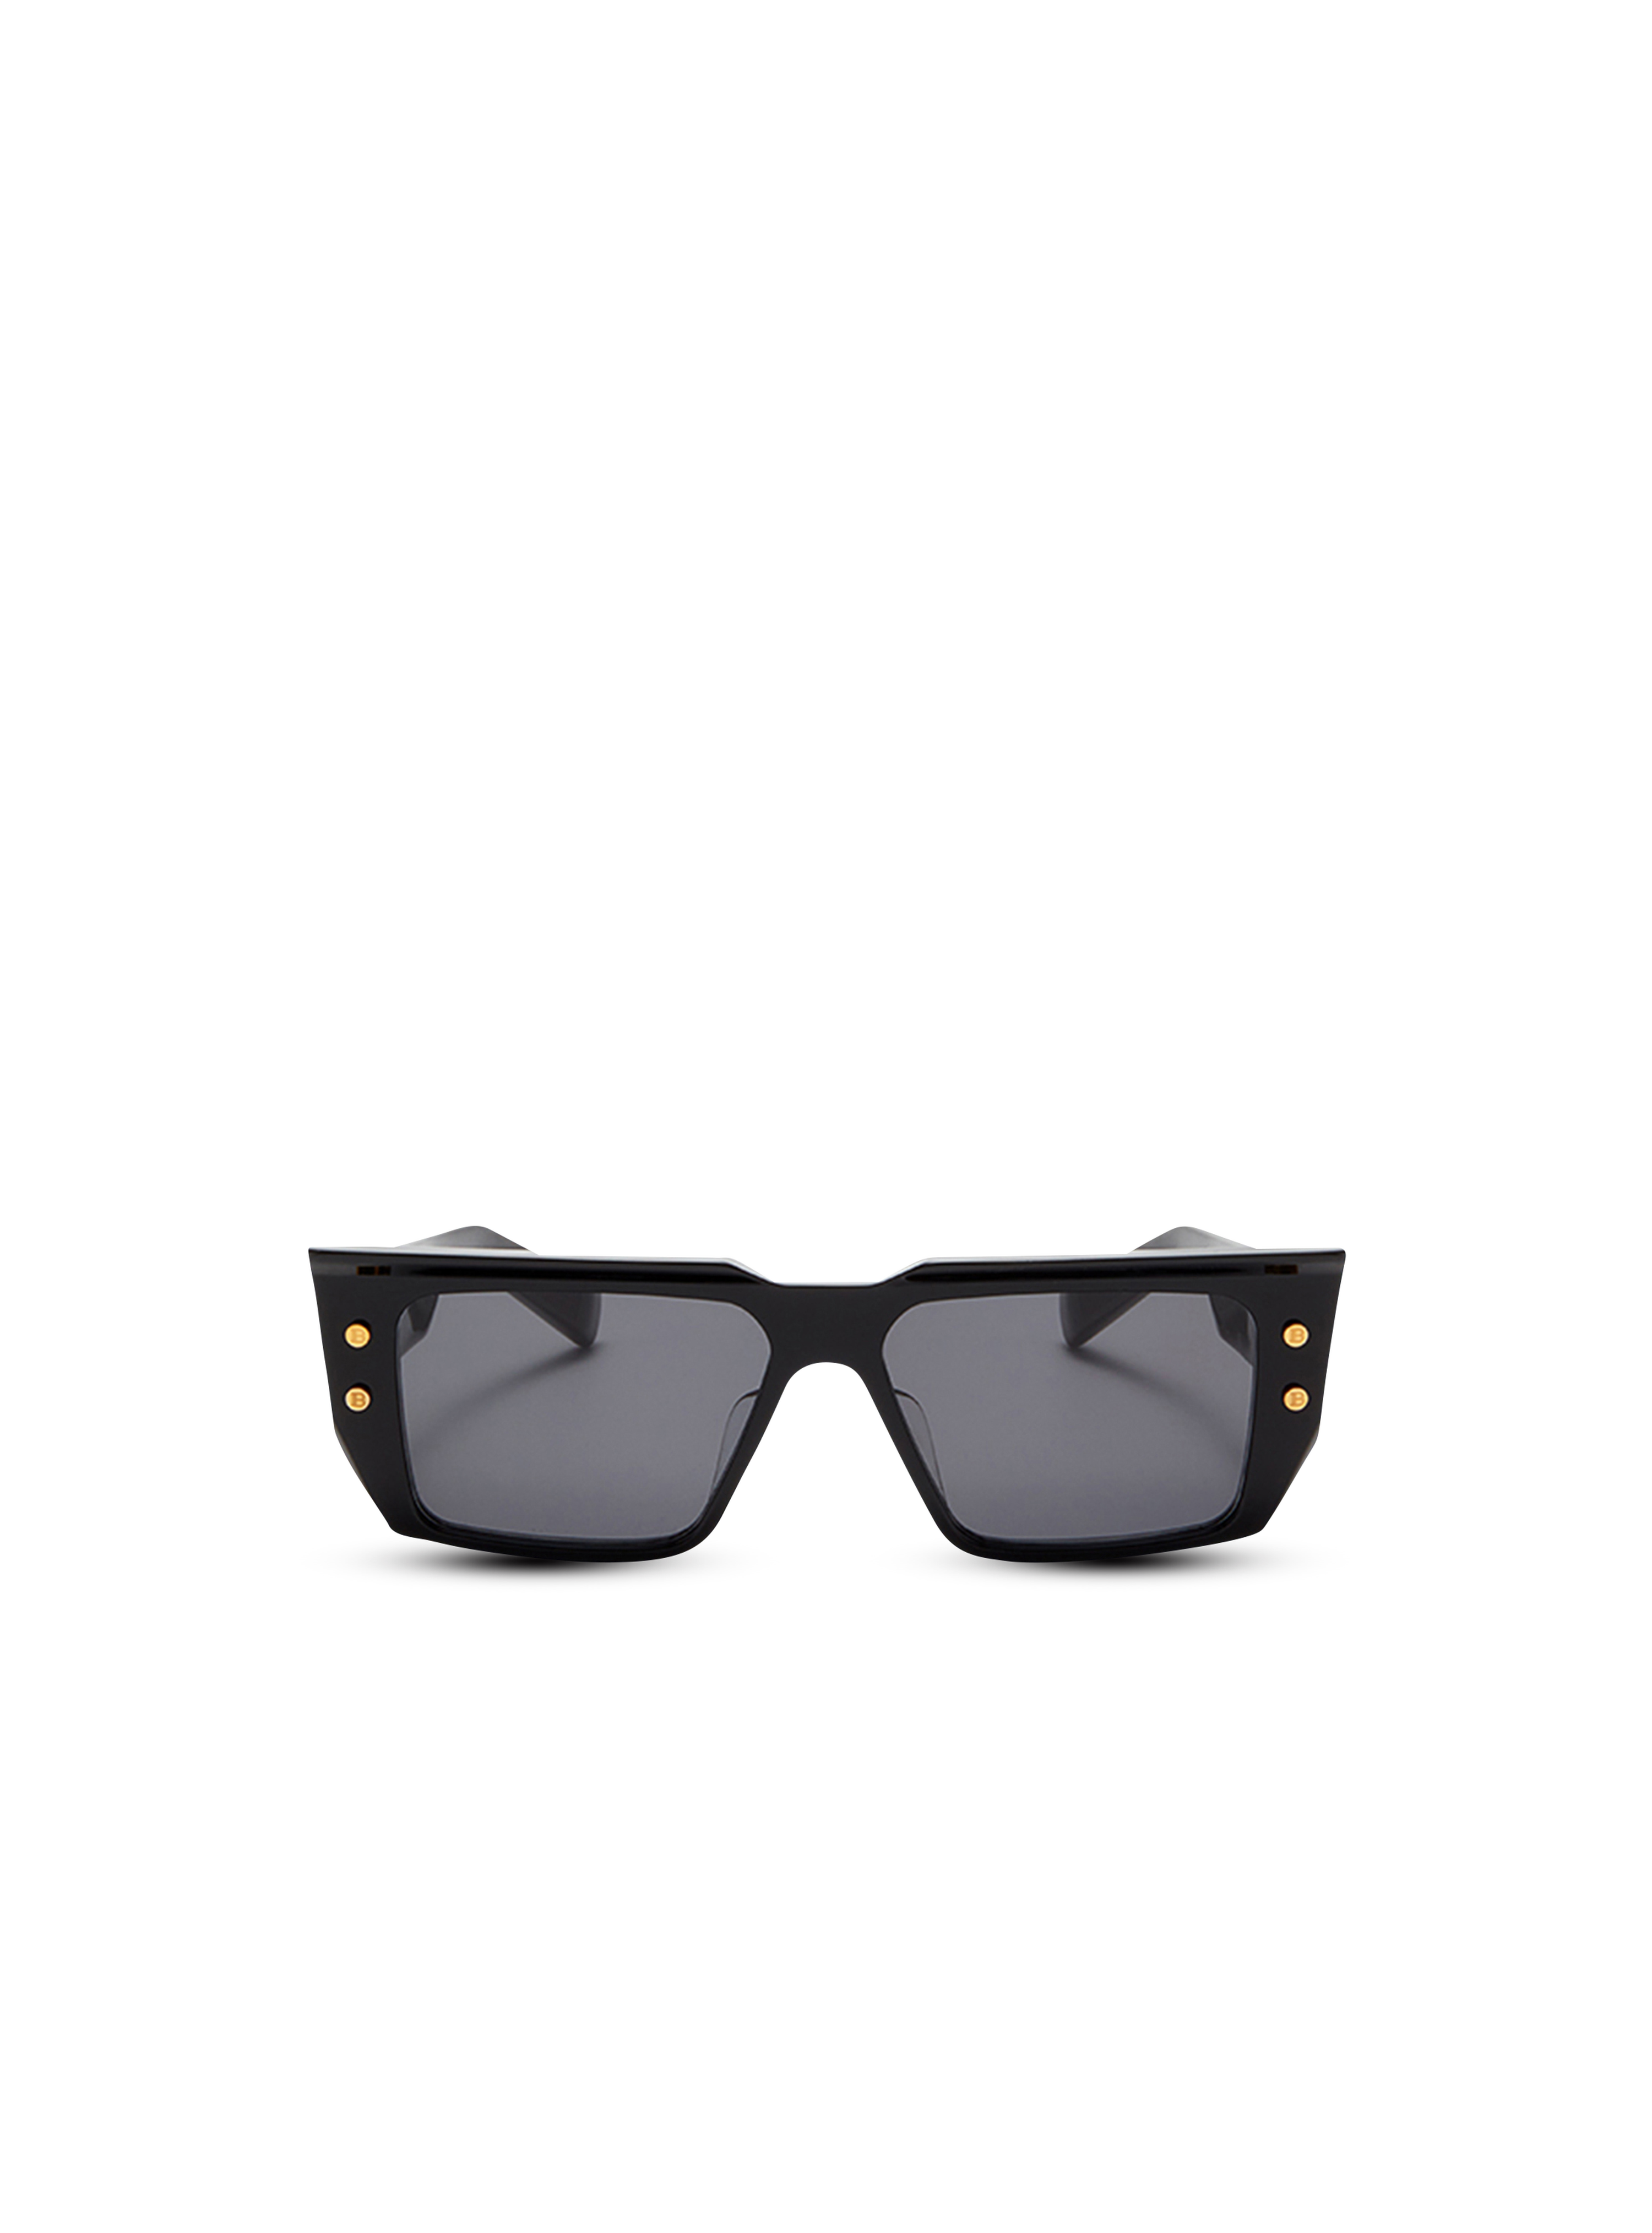 Sonnenbrille B-VI aus Acetat, schwarz